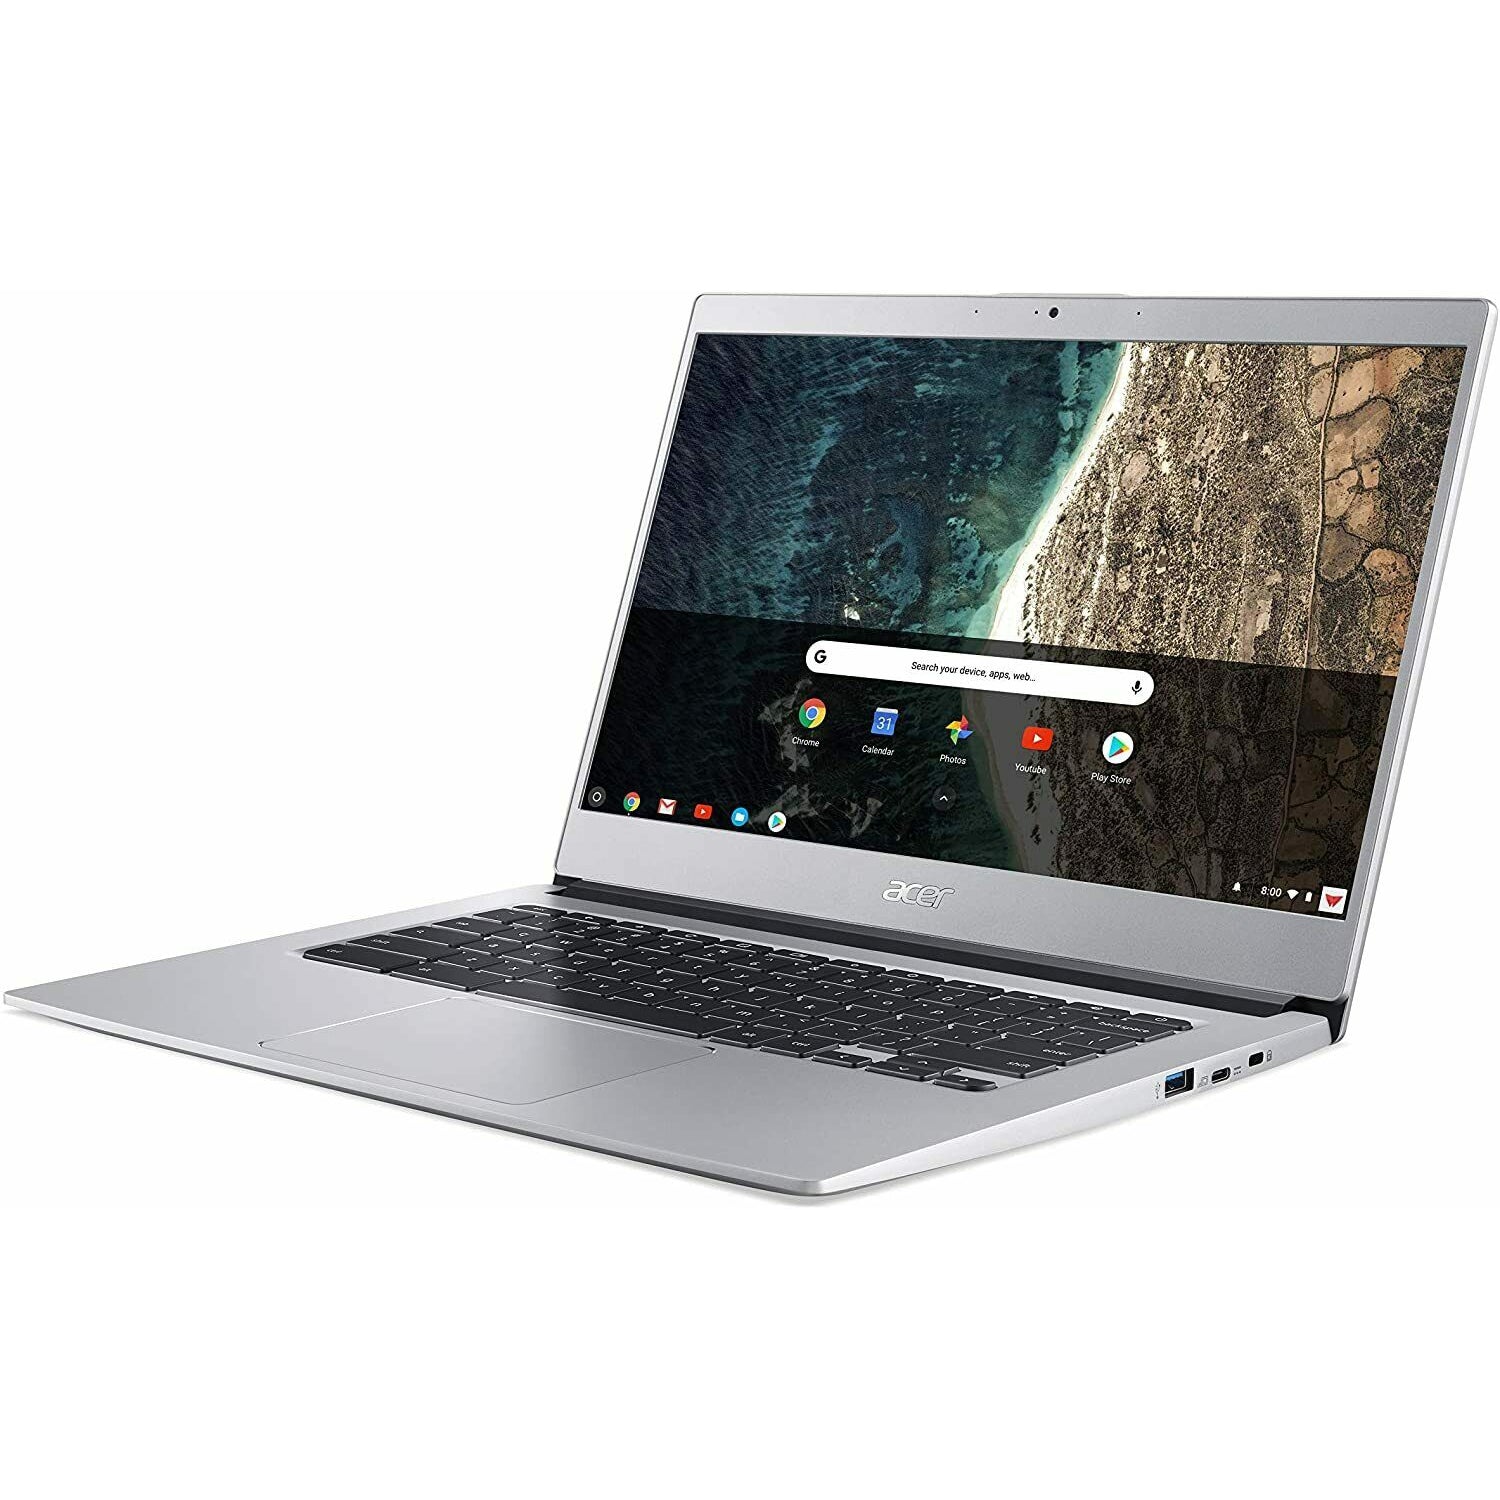 Acer Chromebook 14 CB514-1HT, Intel Celeron N3350, 4GB RAM, 64GB eMMC, Laptop